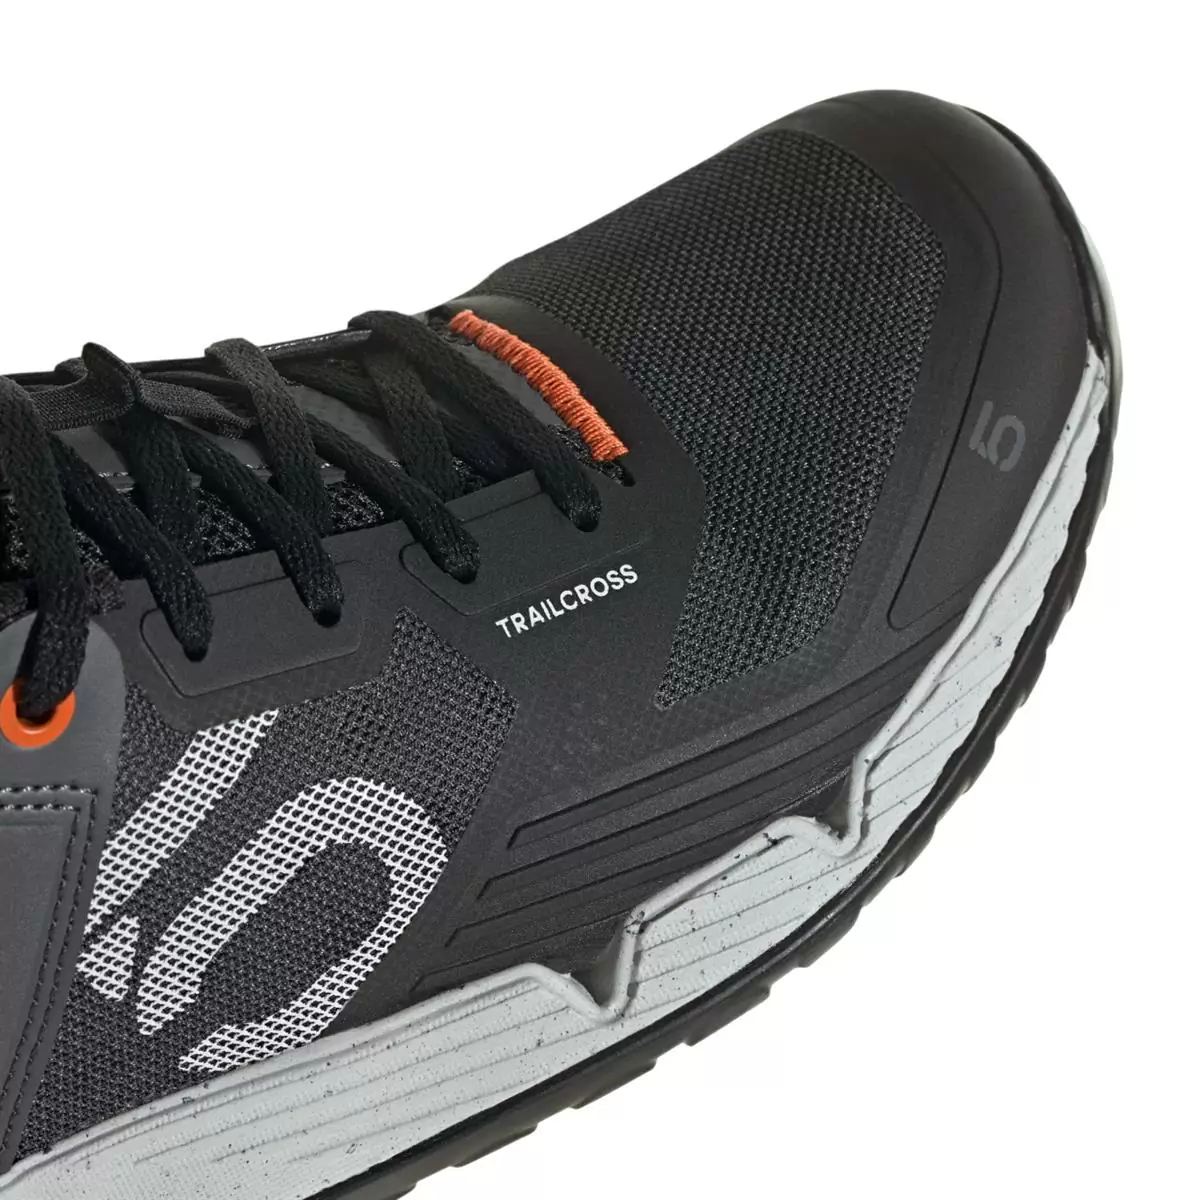 5.10 Trailcross XT Flat MTB Shoes Black/Grey Size 40 #6